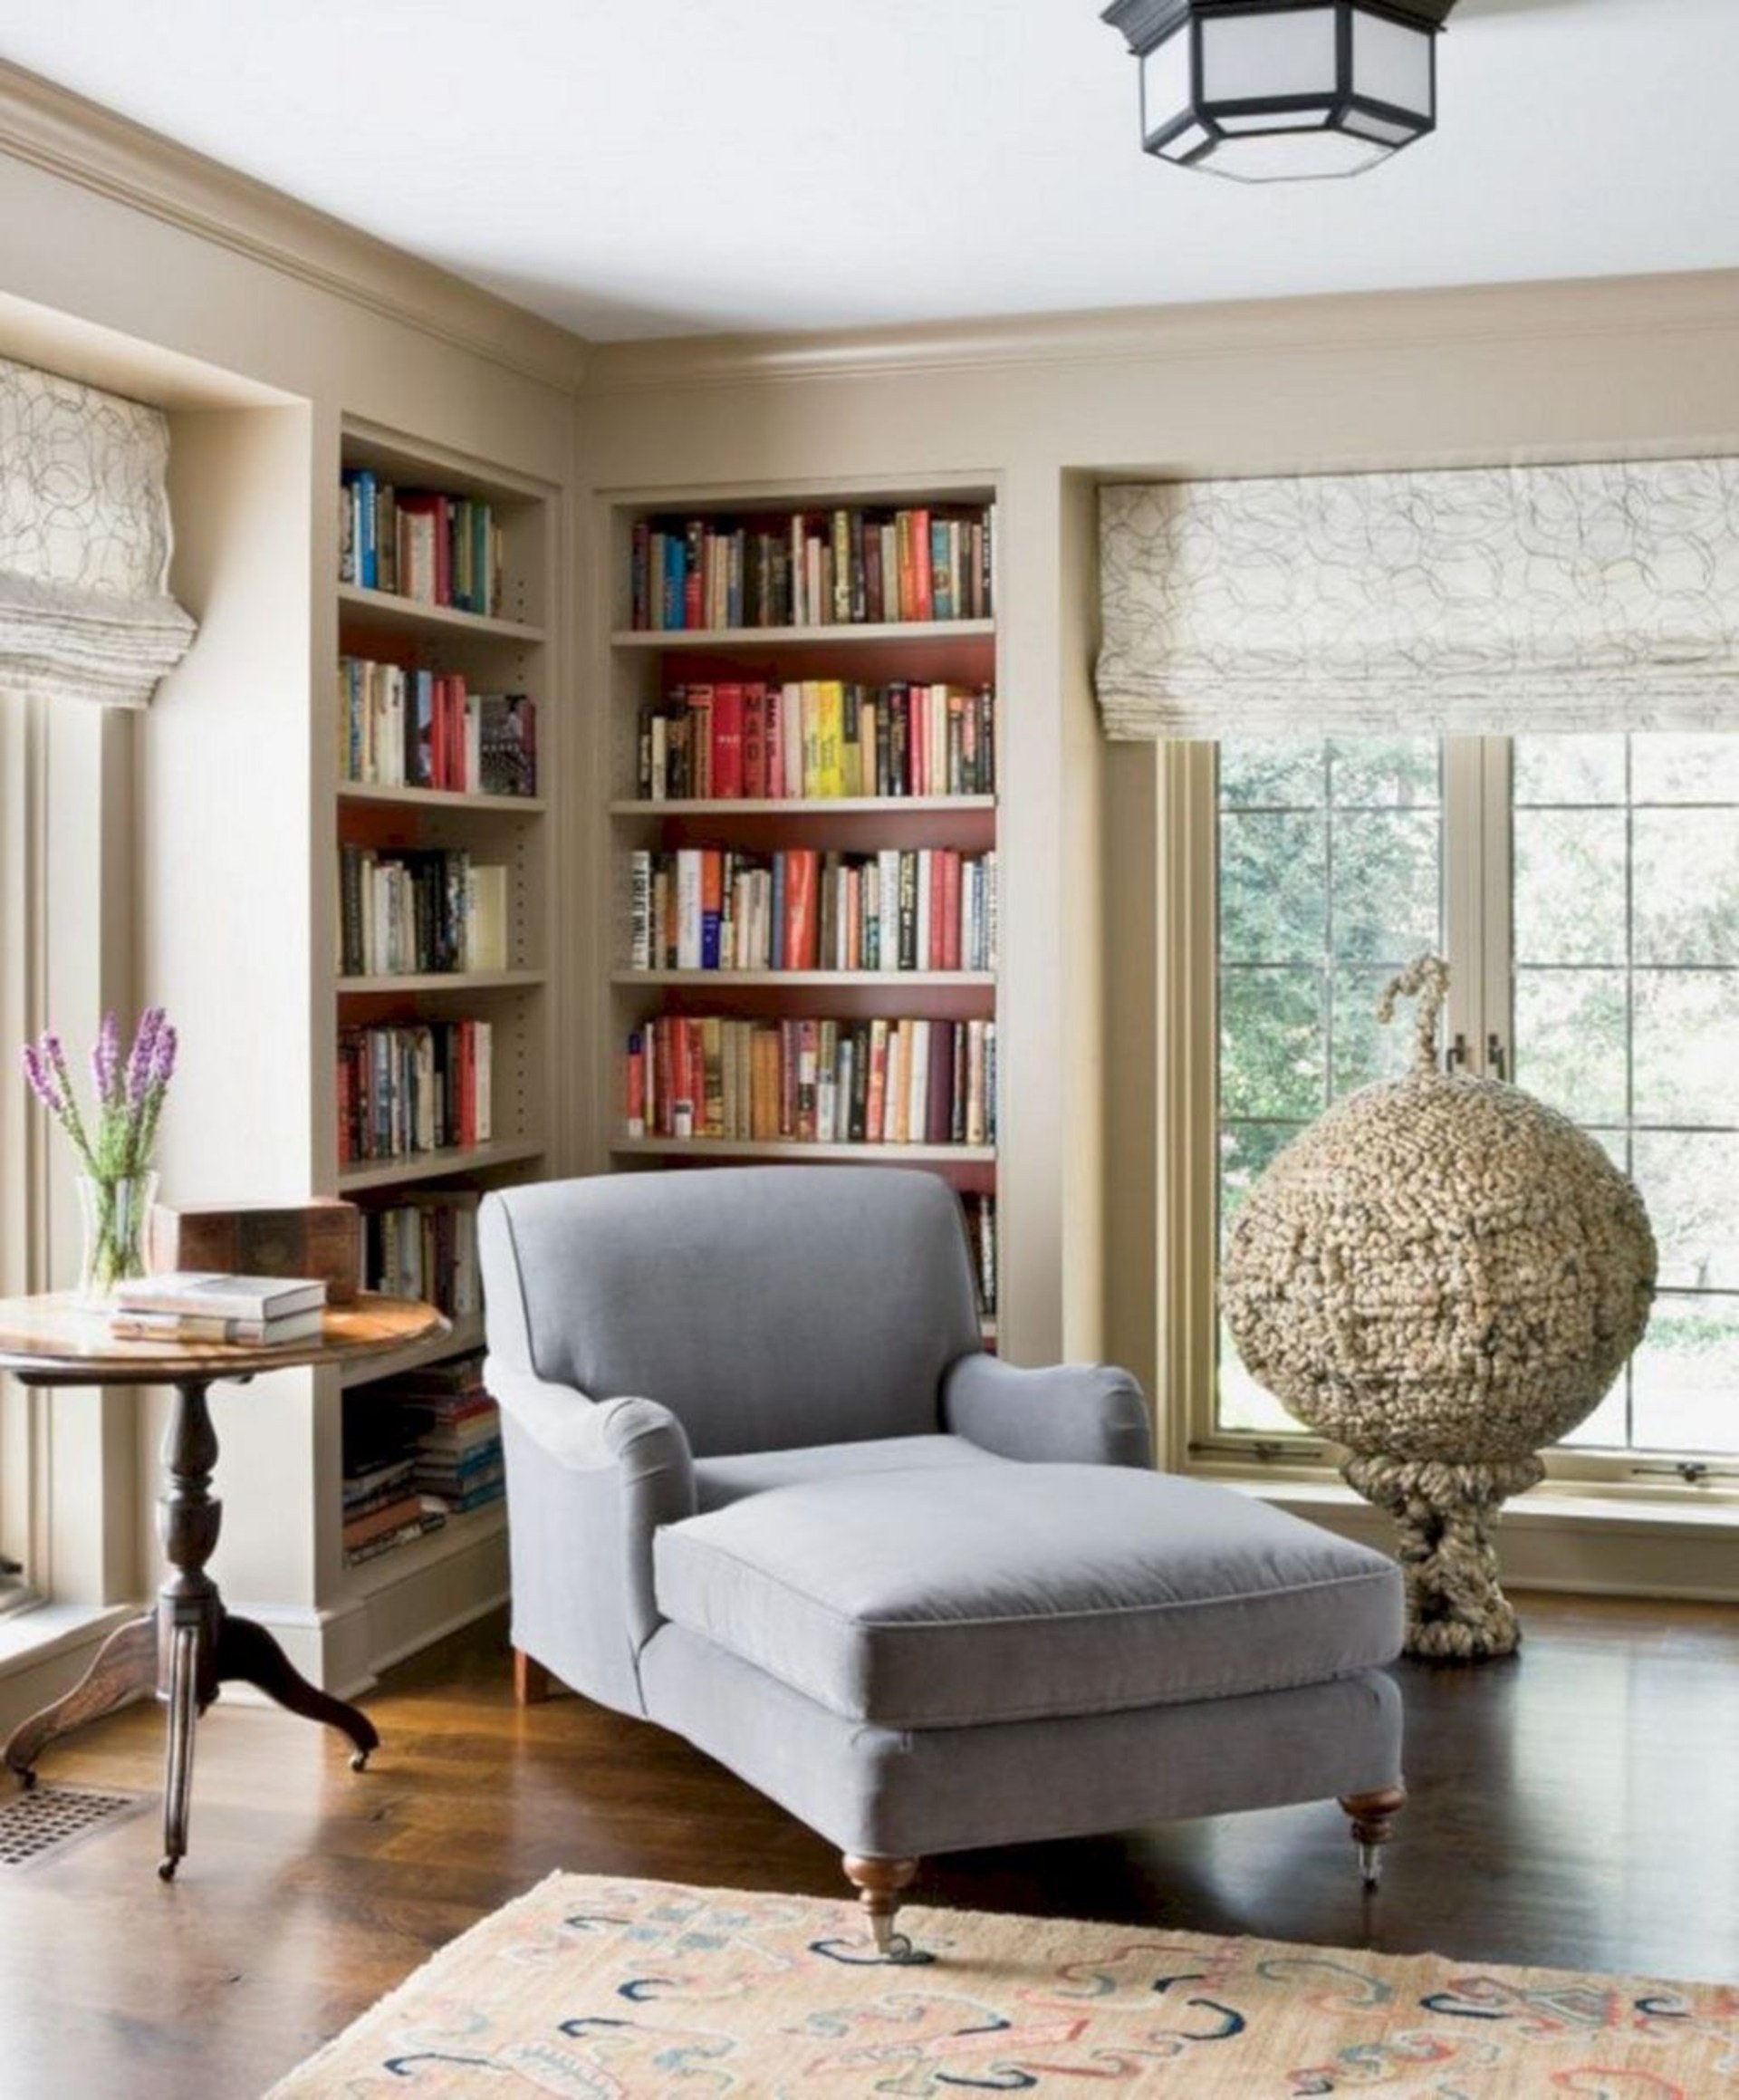 Make Good Use of Your Home Interior Corner